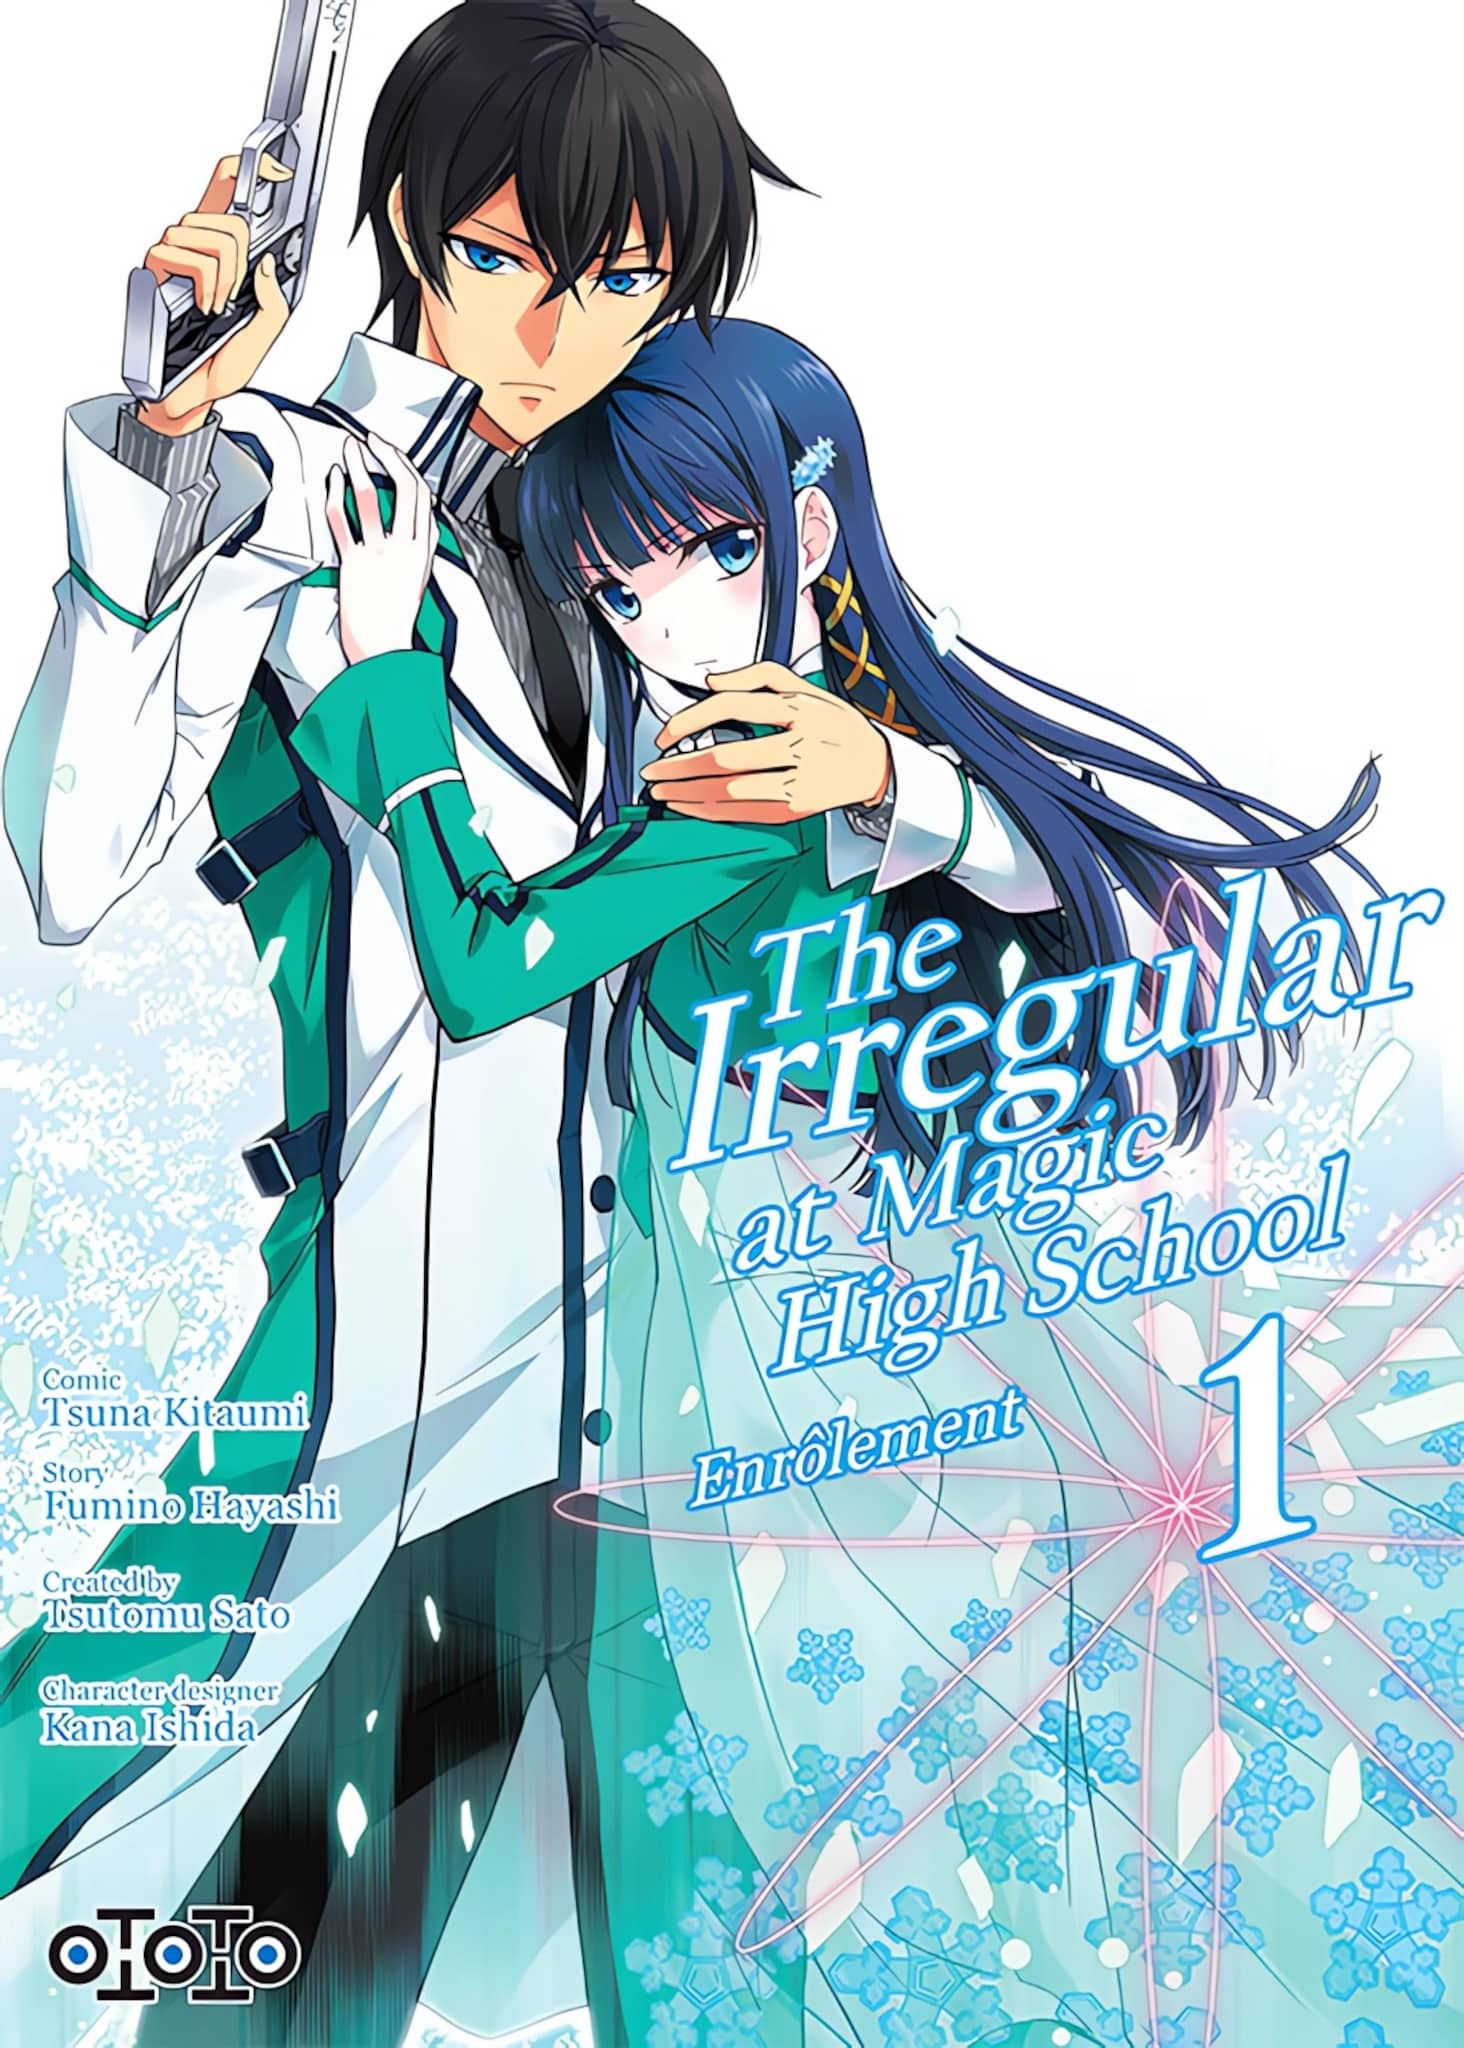 Tome 1 du manga The Irregular at Magic High School, arc Enrôlement